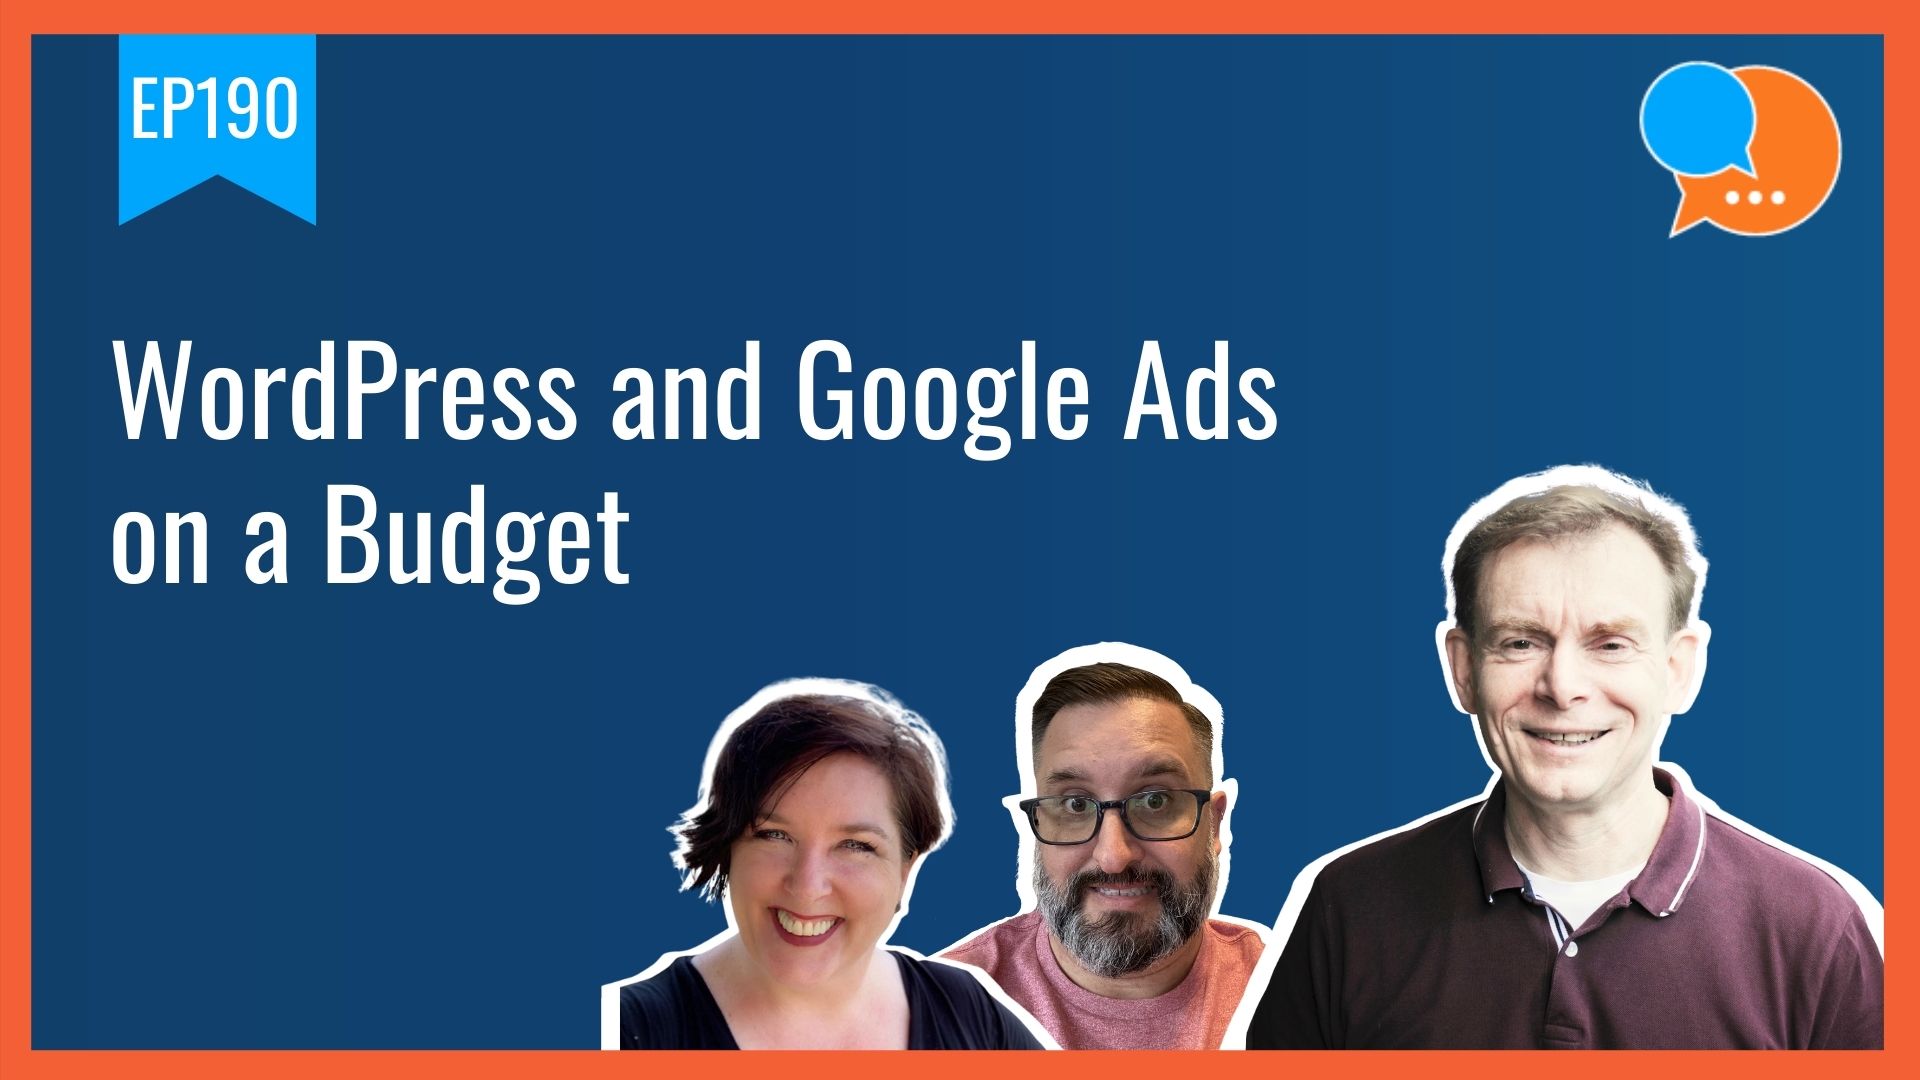 EP190 – WordPress and Google Ads on a Budget